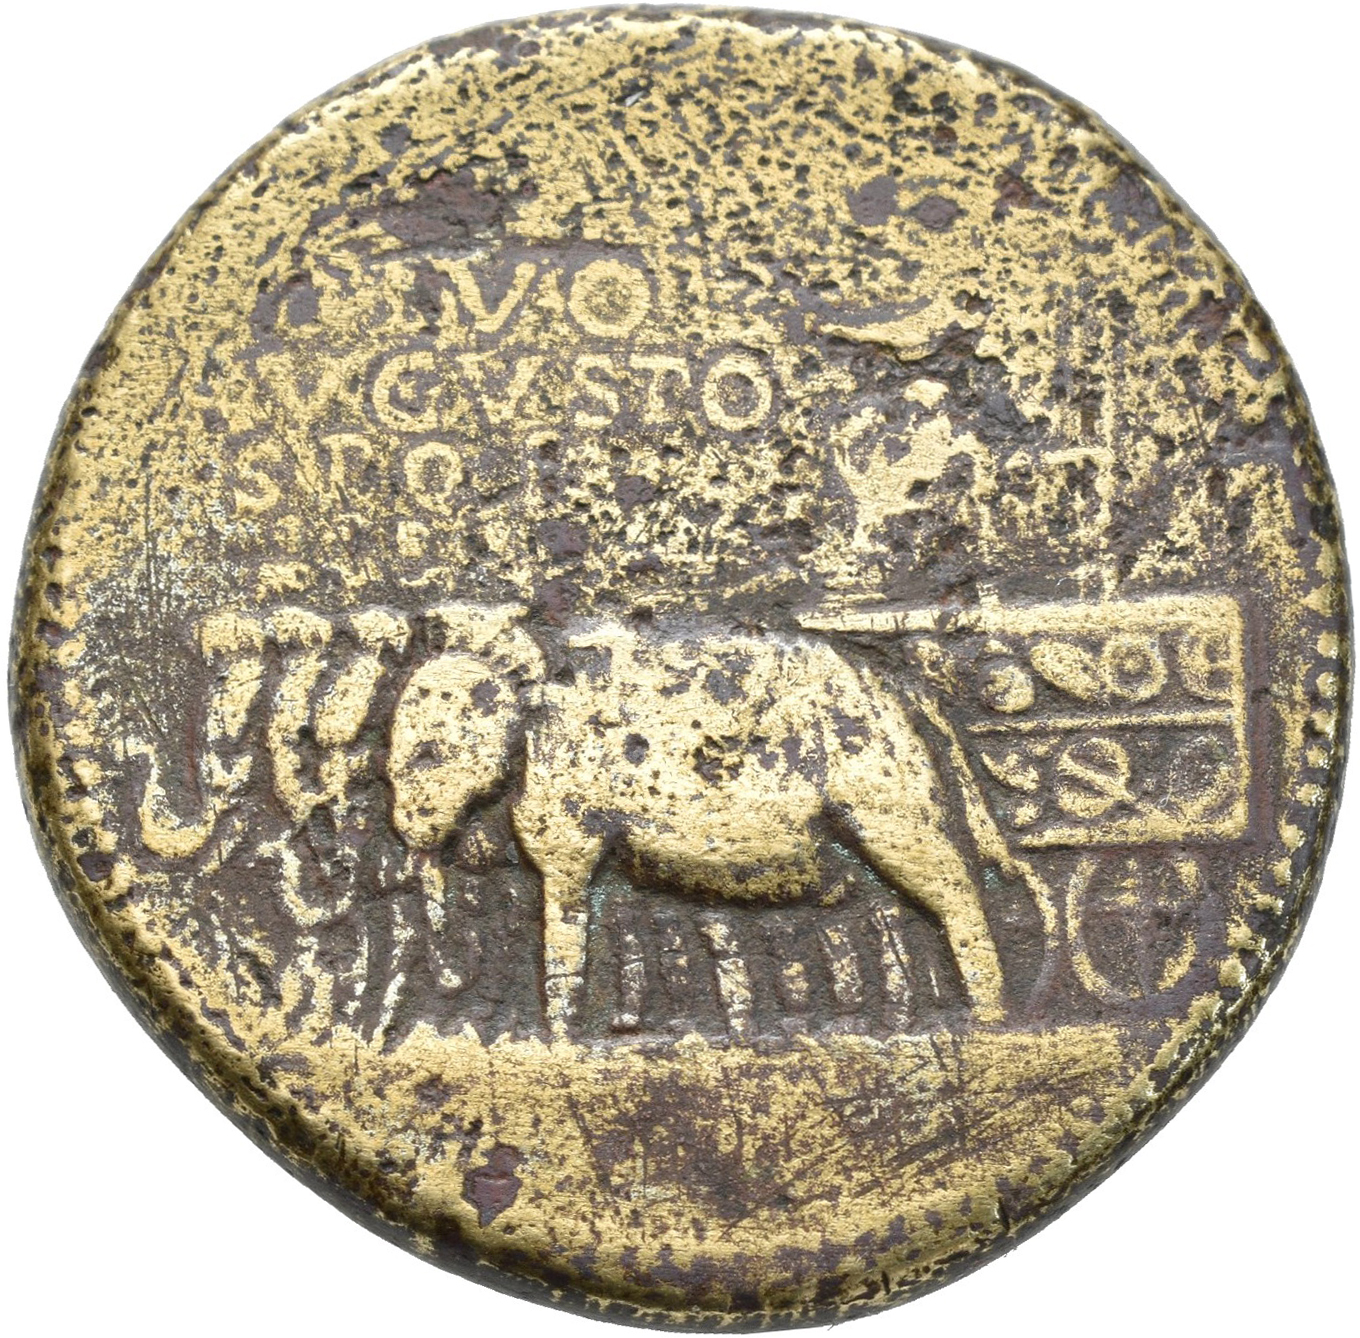 Lot 13005 - Augustus (27 v.Chr. - 14 n.Chr.) | Antike - Rom - Kaiserzeit  -  Auktionshaus Christoph Gärtner GmbH & Co. KG 53rd AUCTION - Day 6 Coins/Banknotes